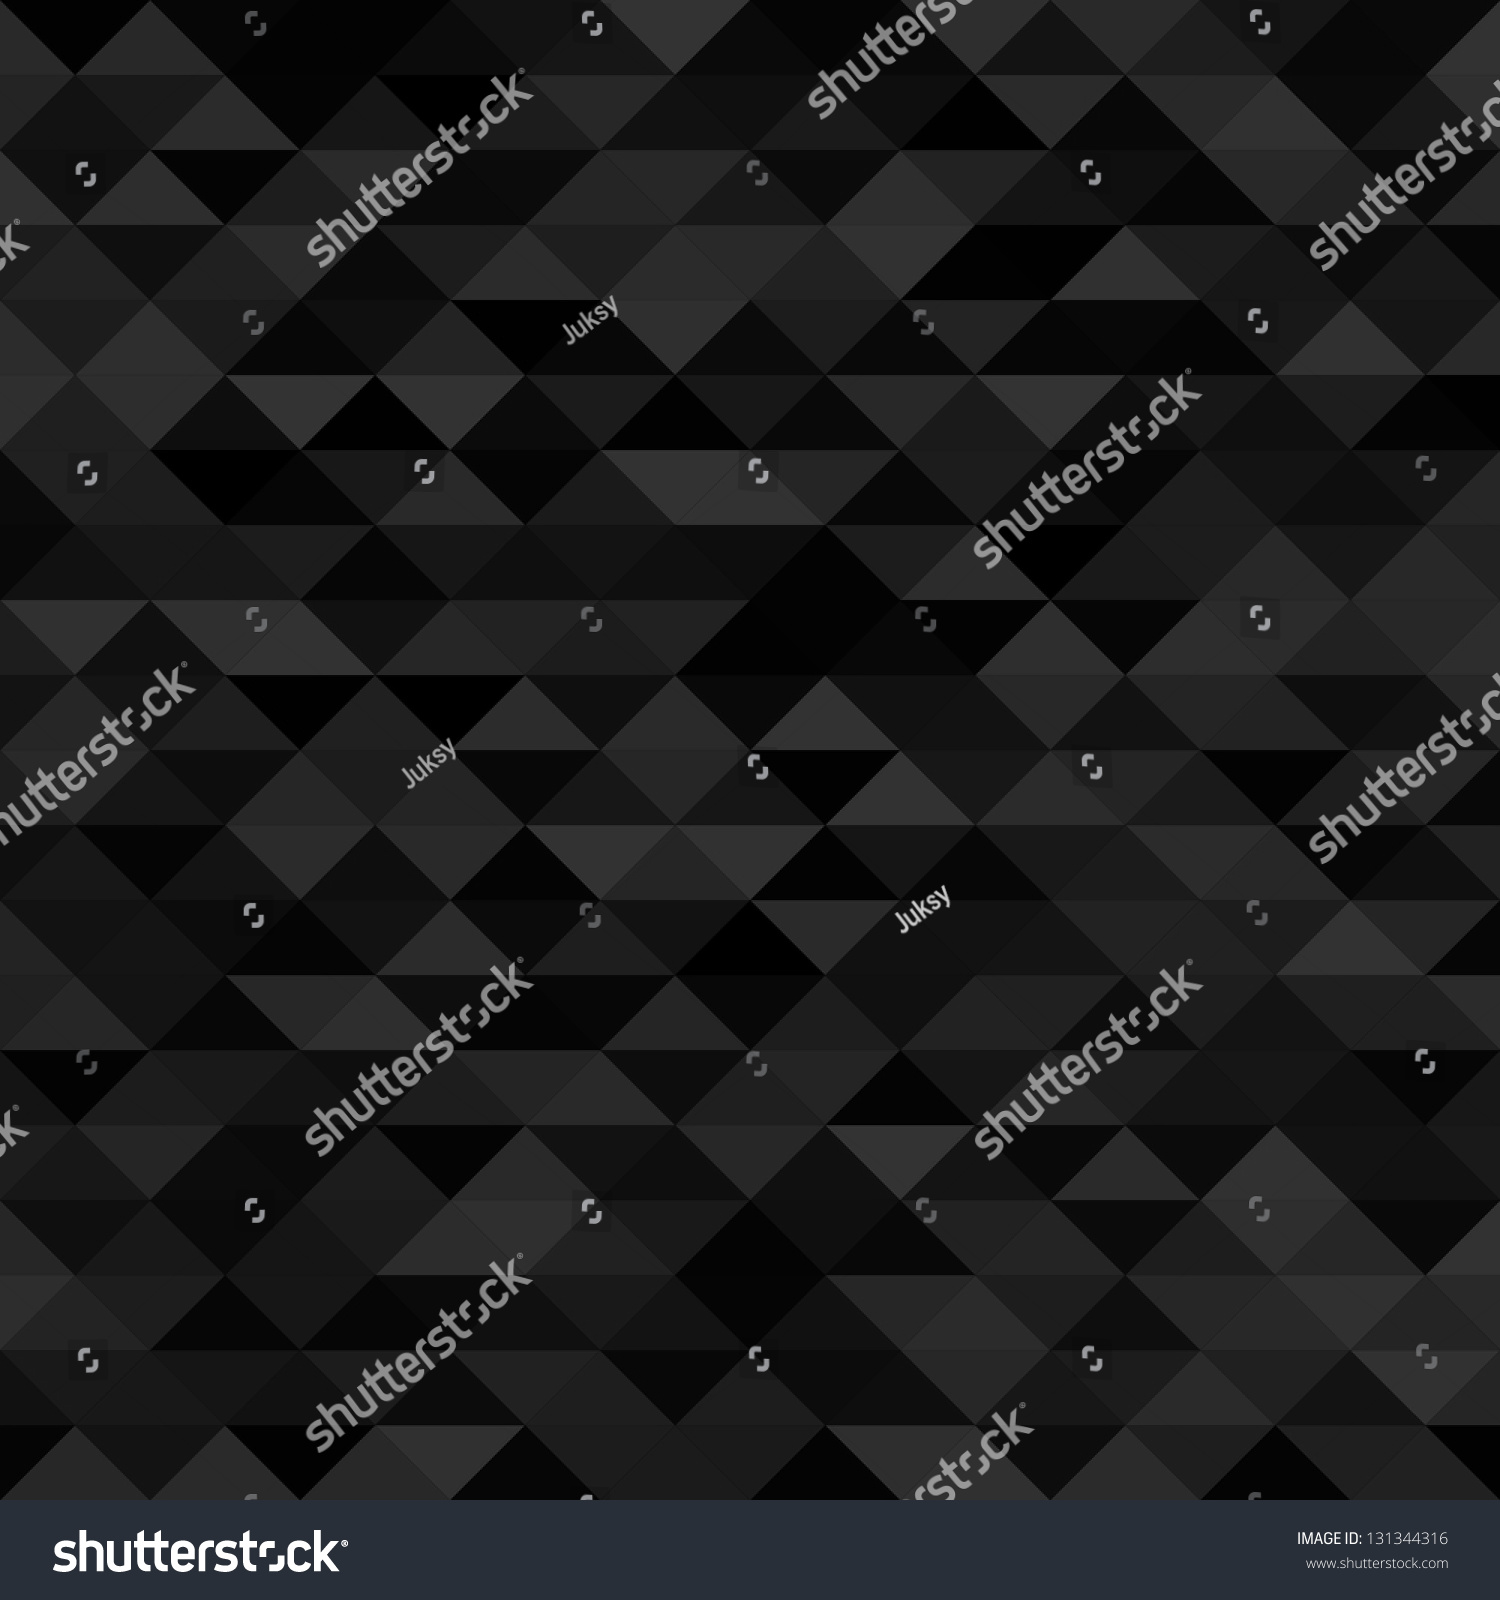 Geometrical Vector Background - 131344316 : Shutterstock